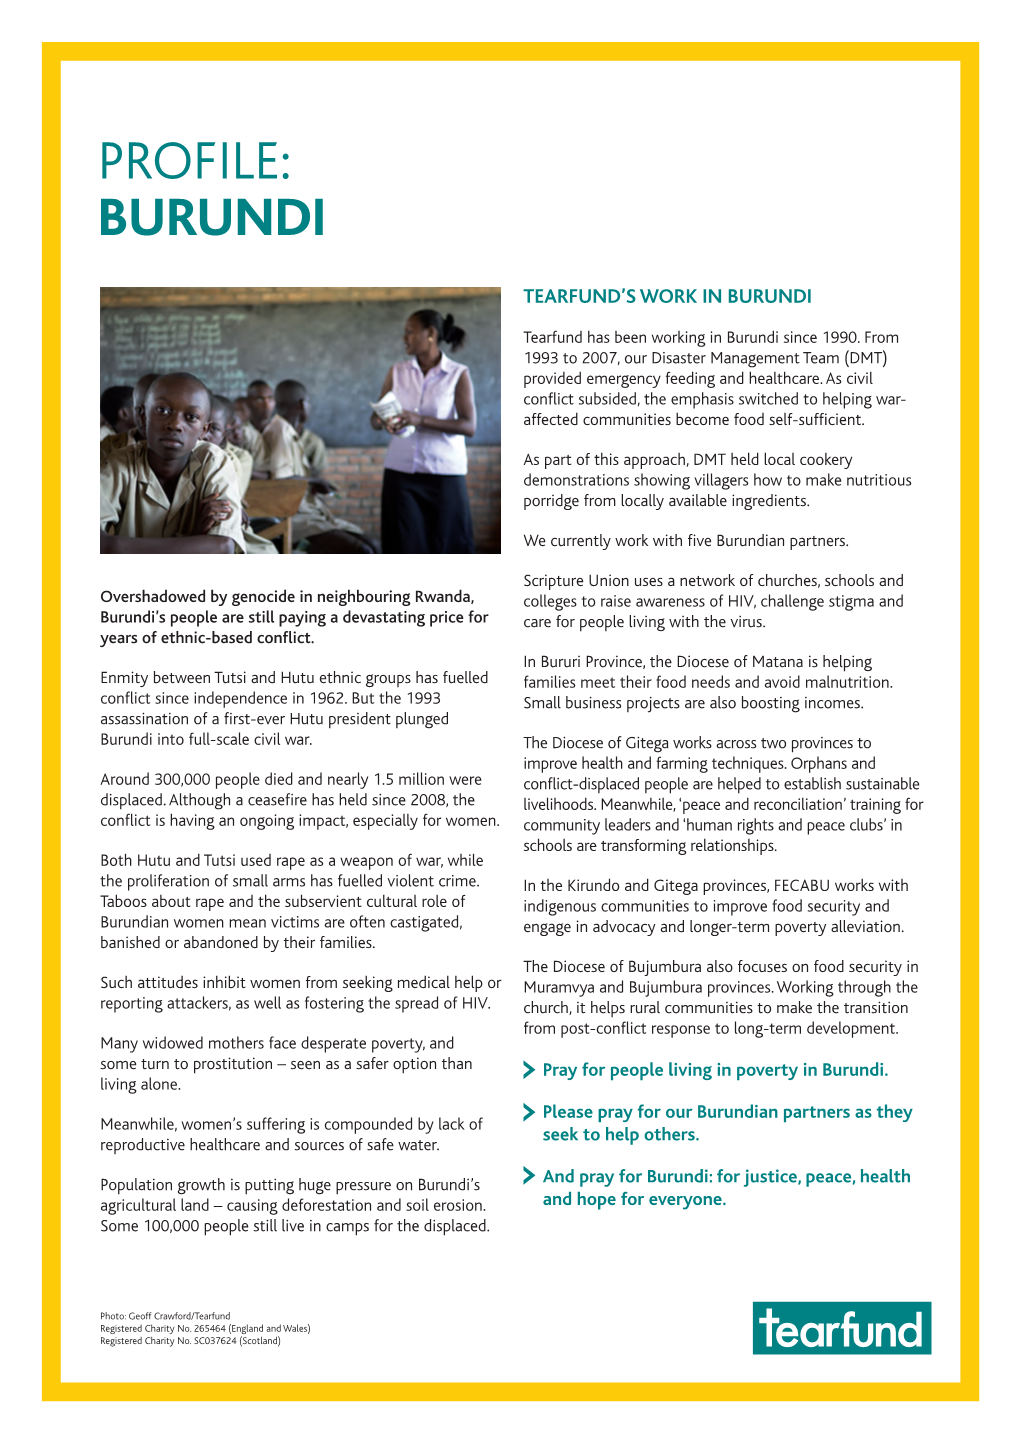 Profile: Burundi